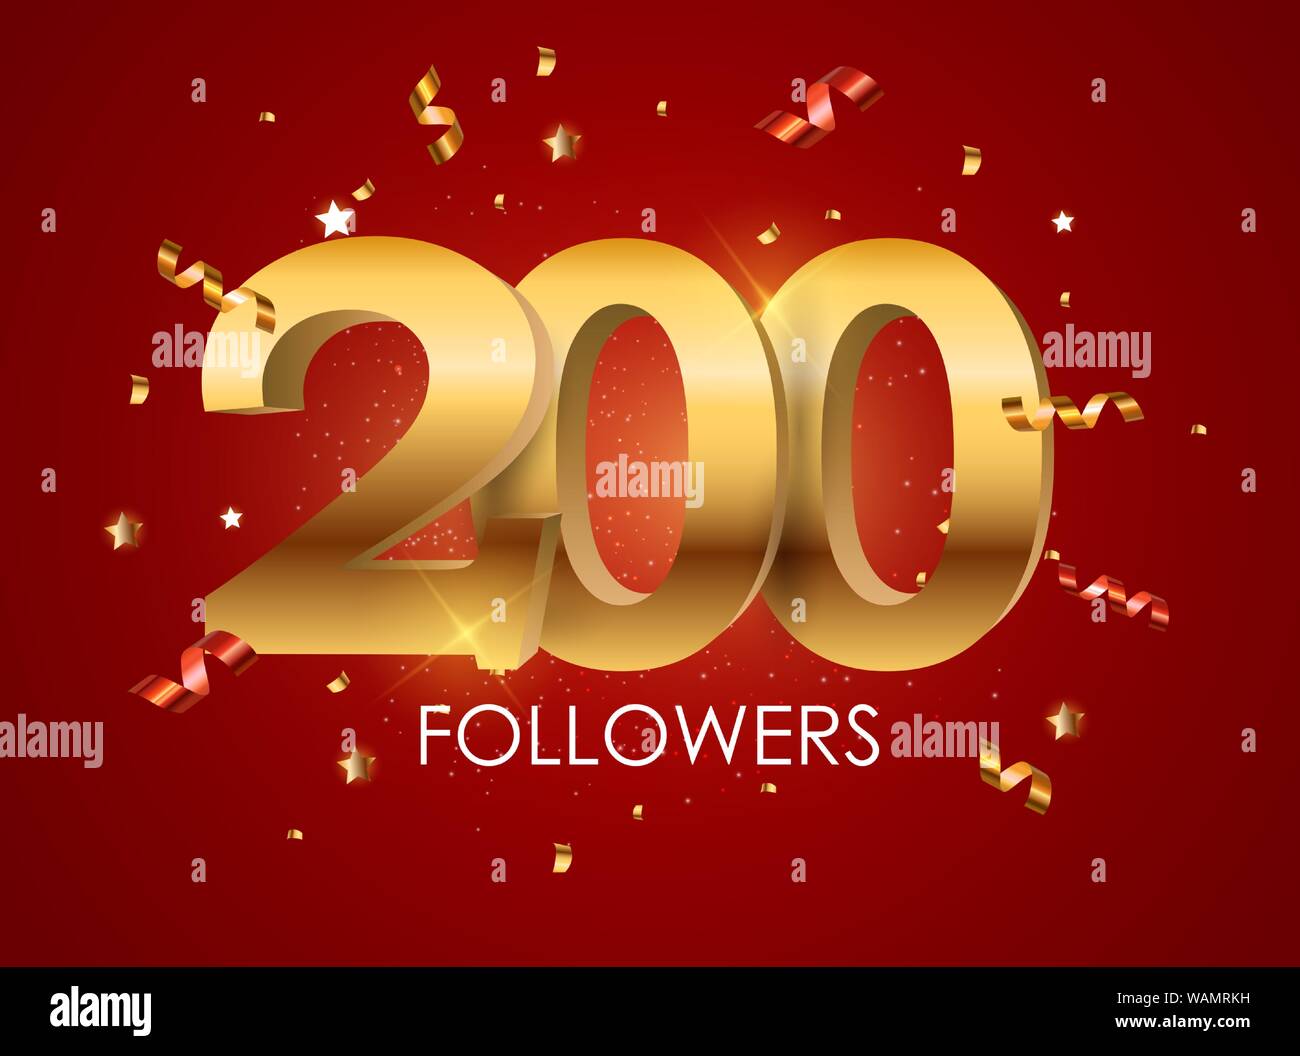 200 Followers Background Template Vector Illustration EPS10 Stock Vector